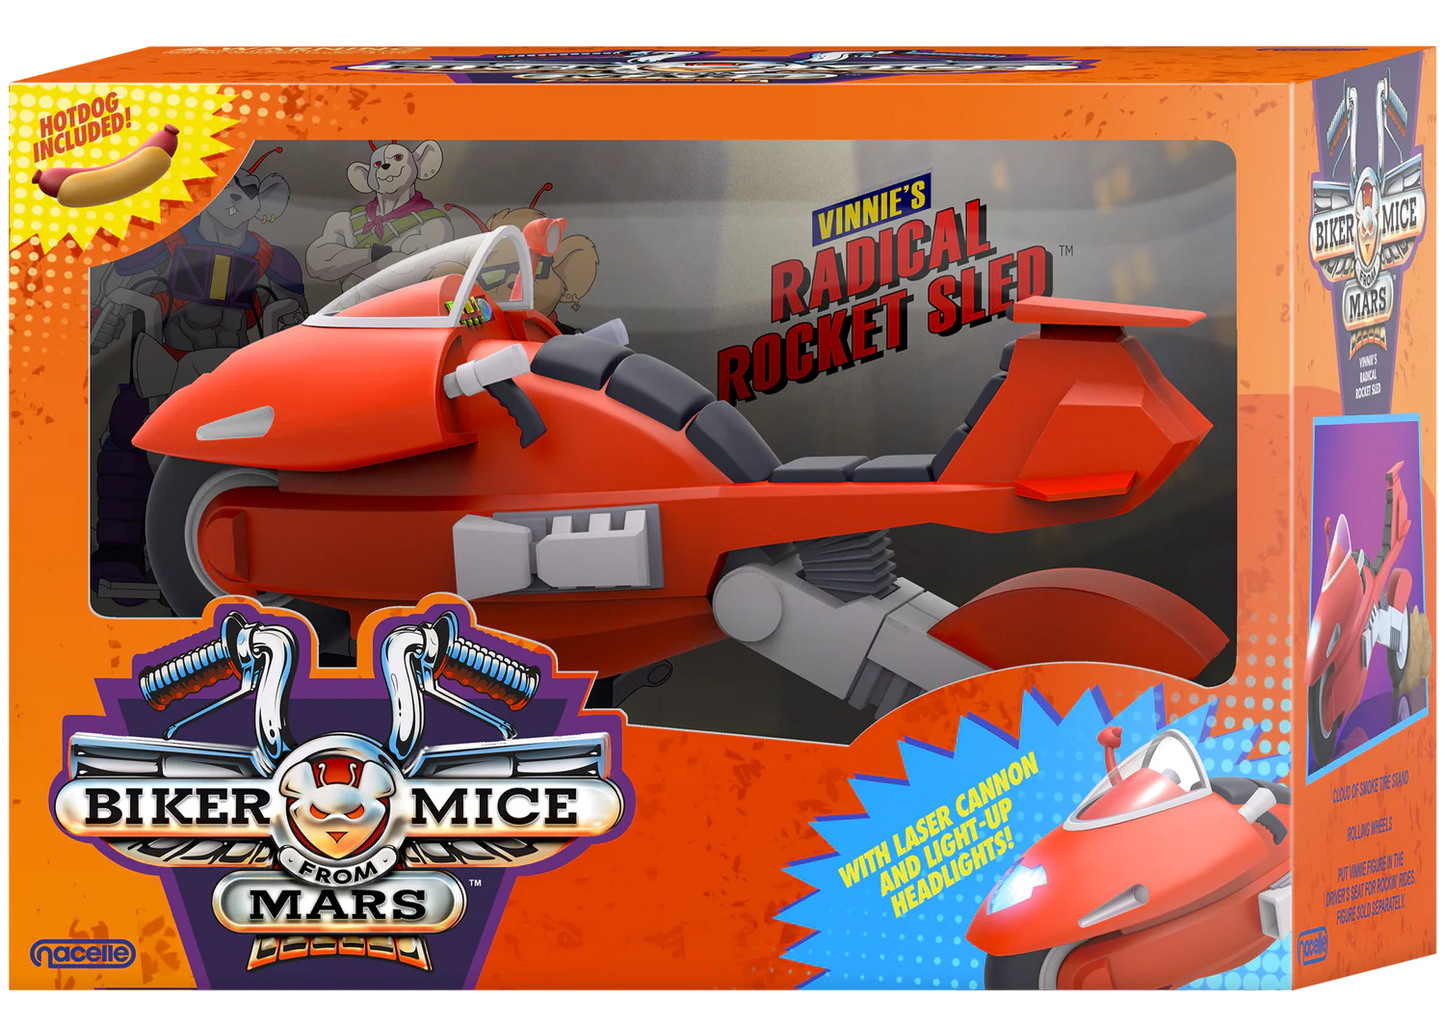 Biker Mice from Mars - Vinnie's Radical Rocket Sled